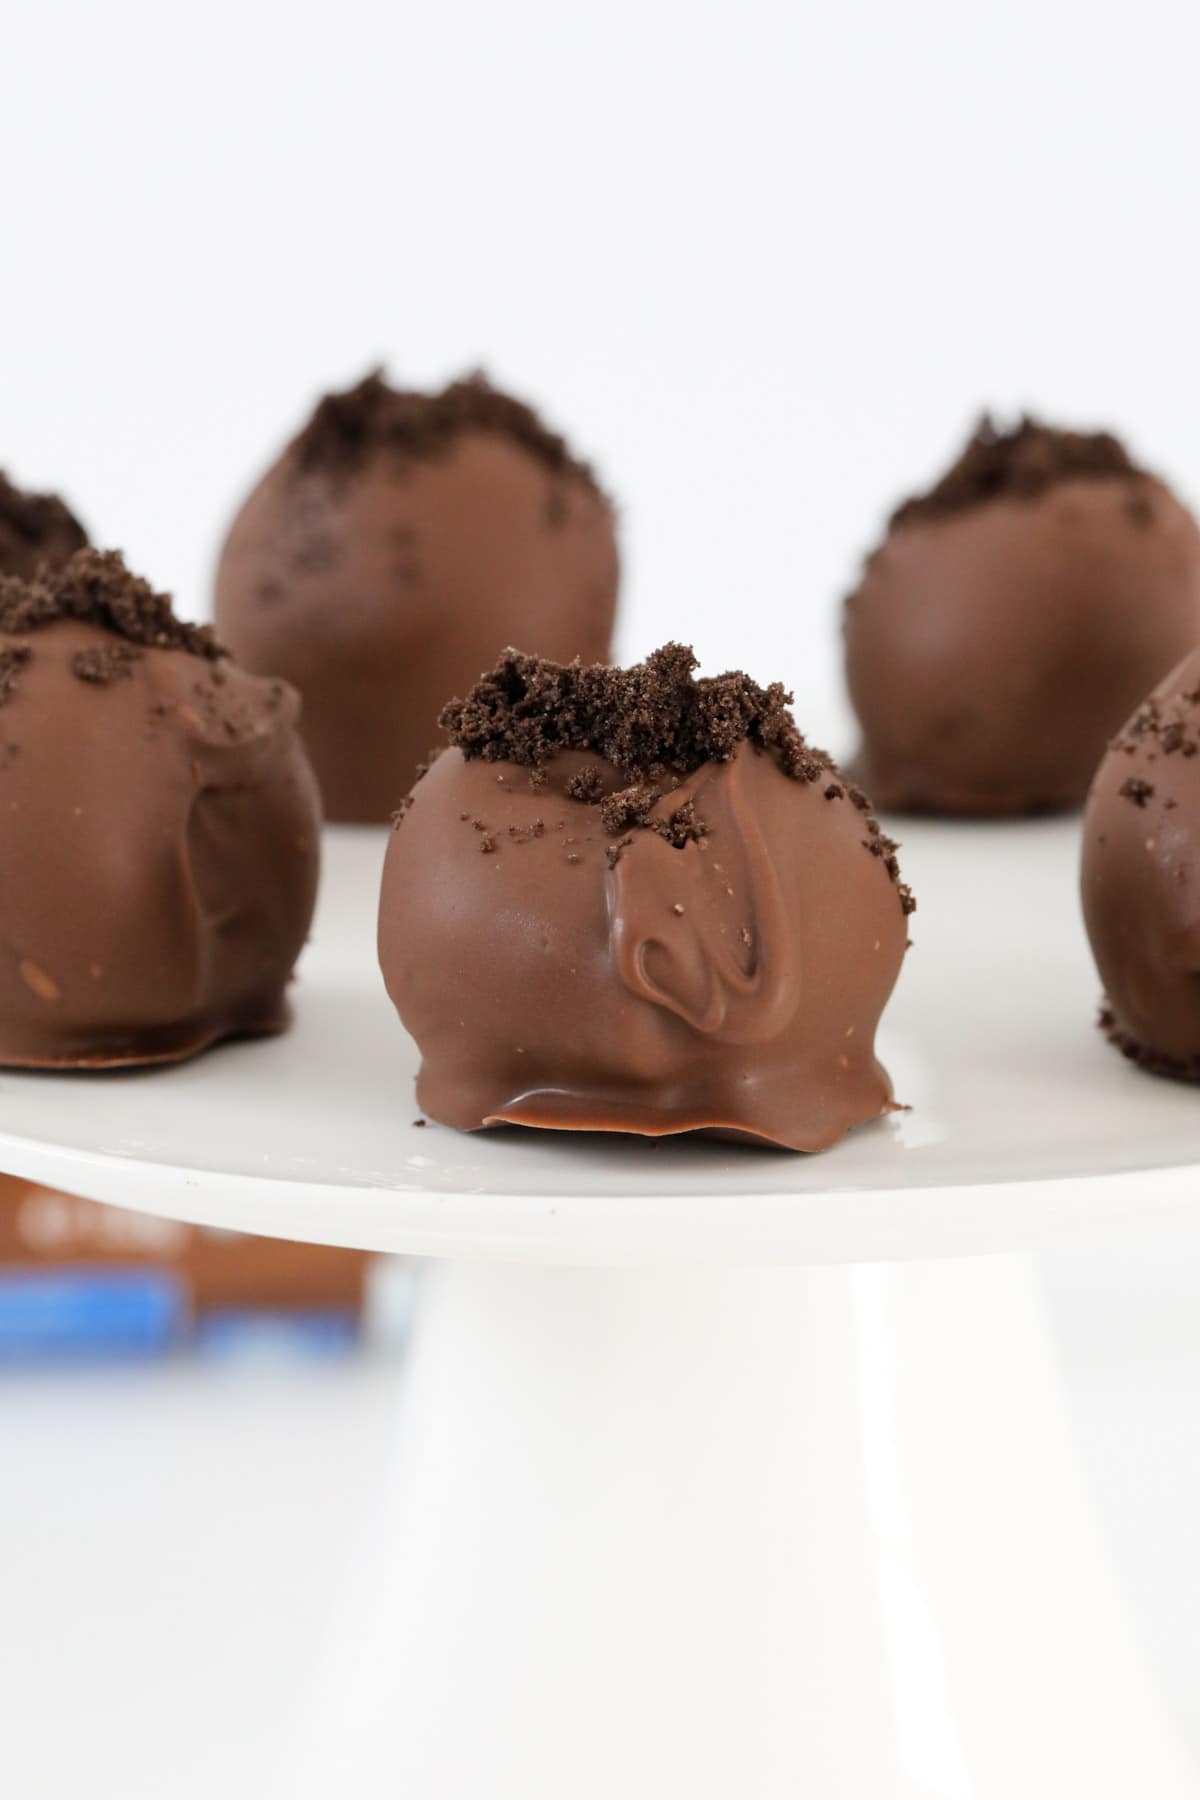 Oreo crumbs on top of chocolate truffles.